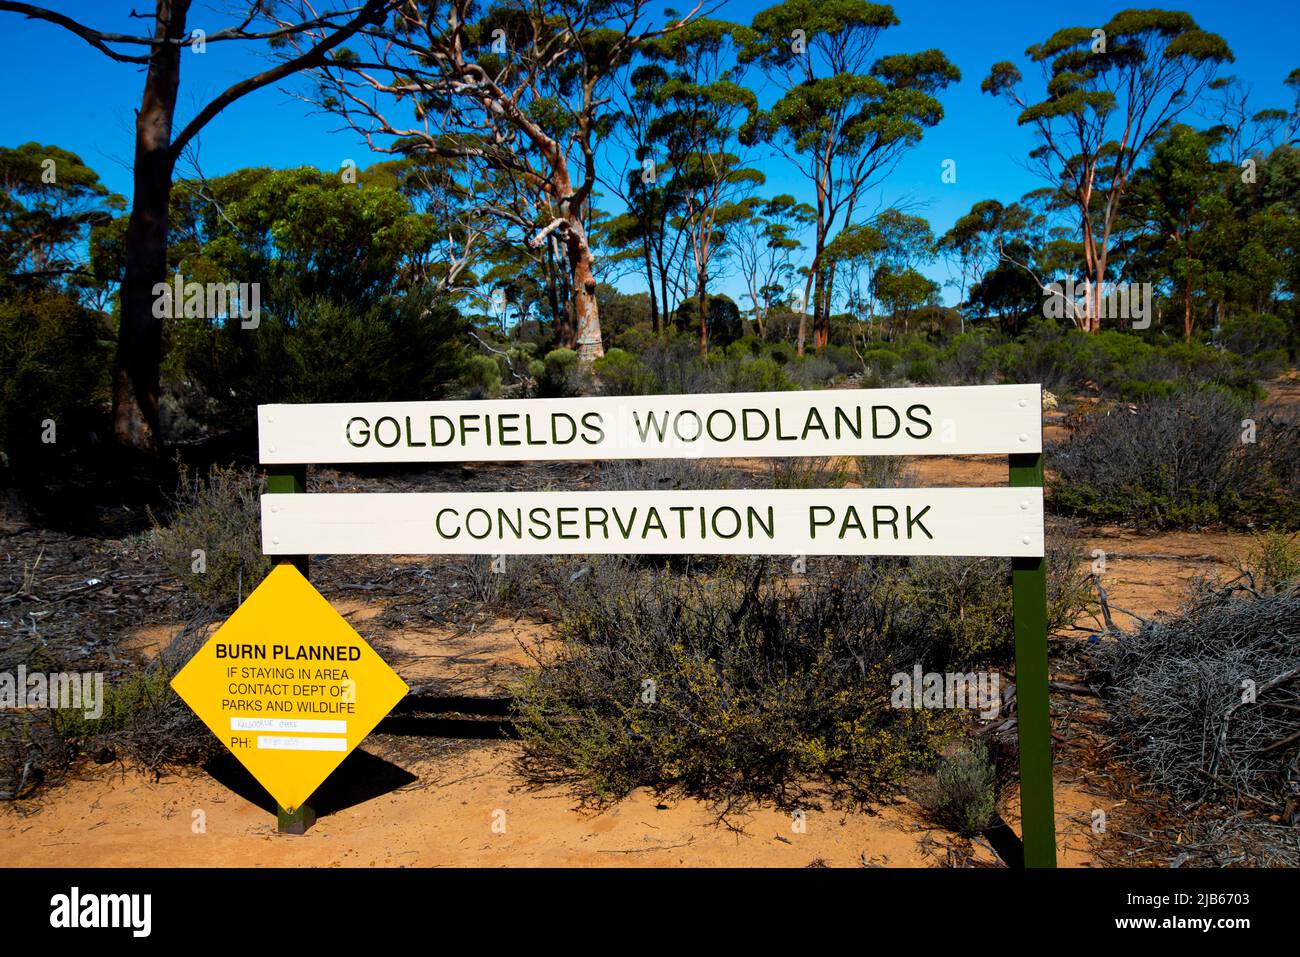 Parque de Conservación Goldfields Woodlands - Australia Occidental Foto de stock